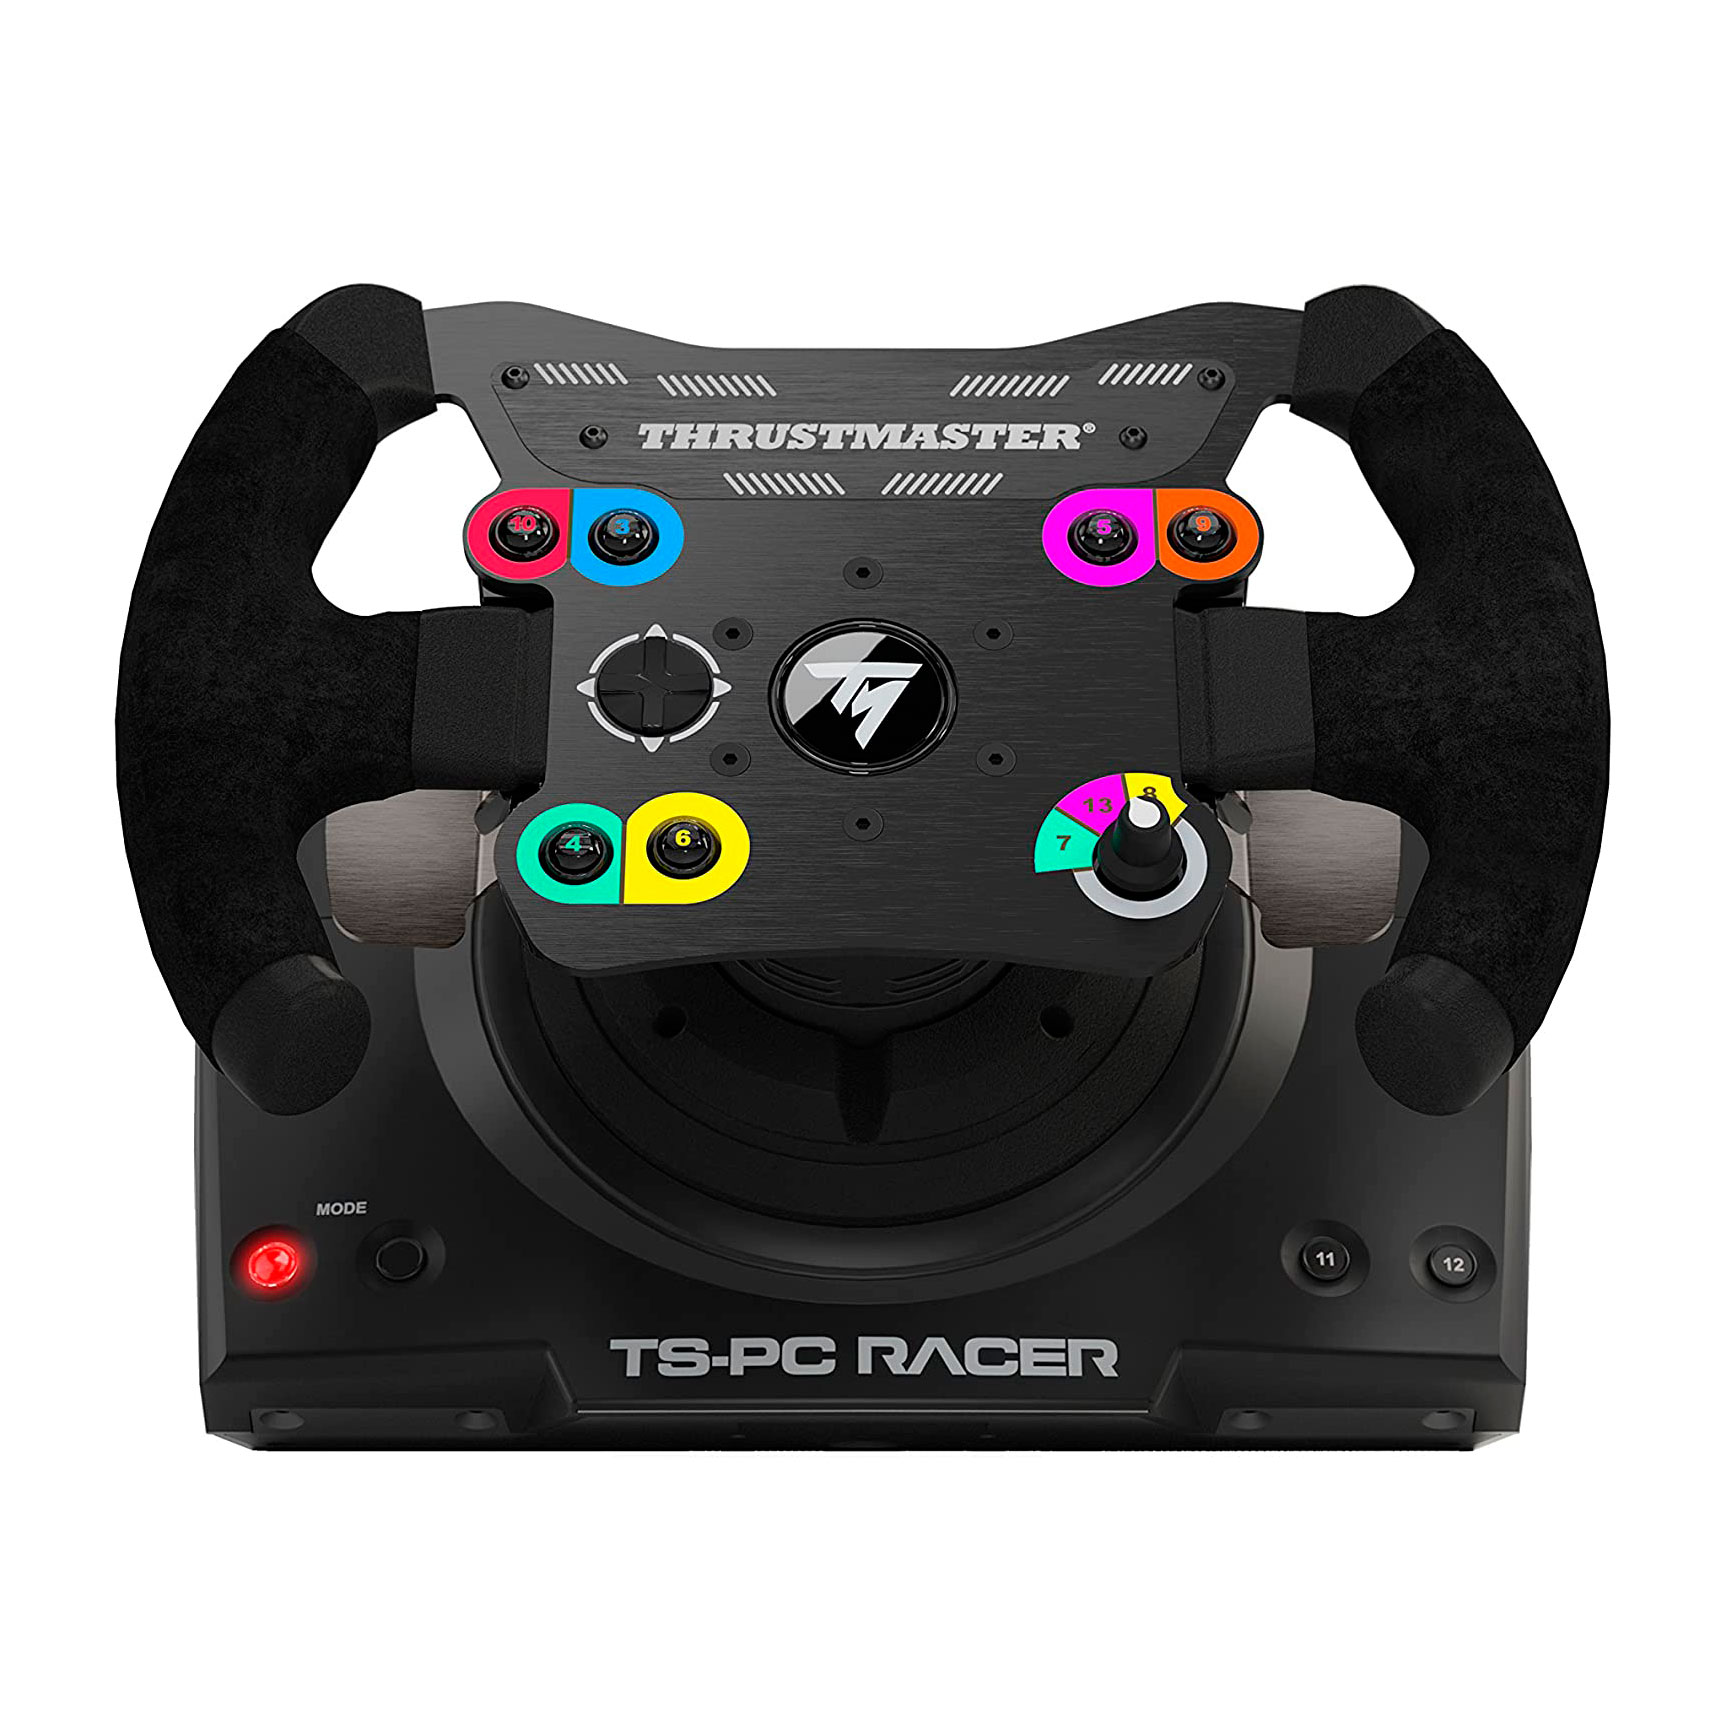 Руль Thrustmaster TS-PC Racer, черный руль thrustmaster t300 ferrari alcantara